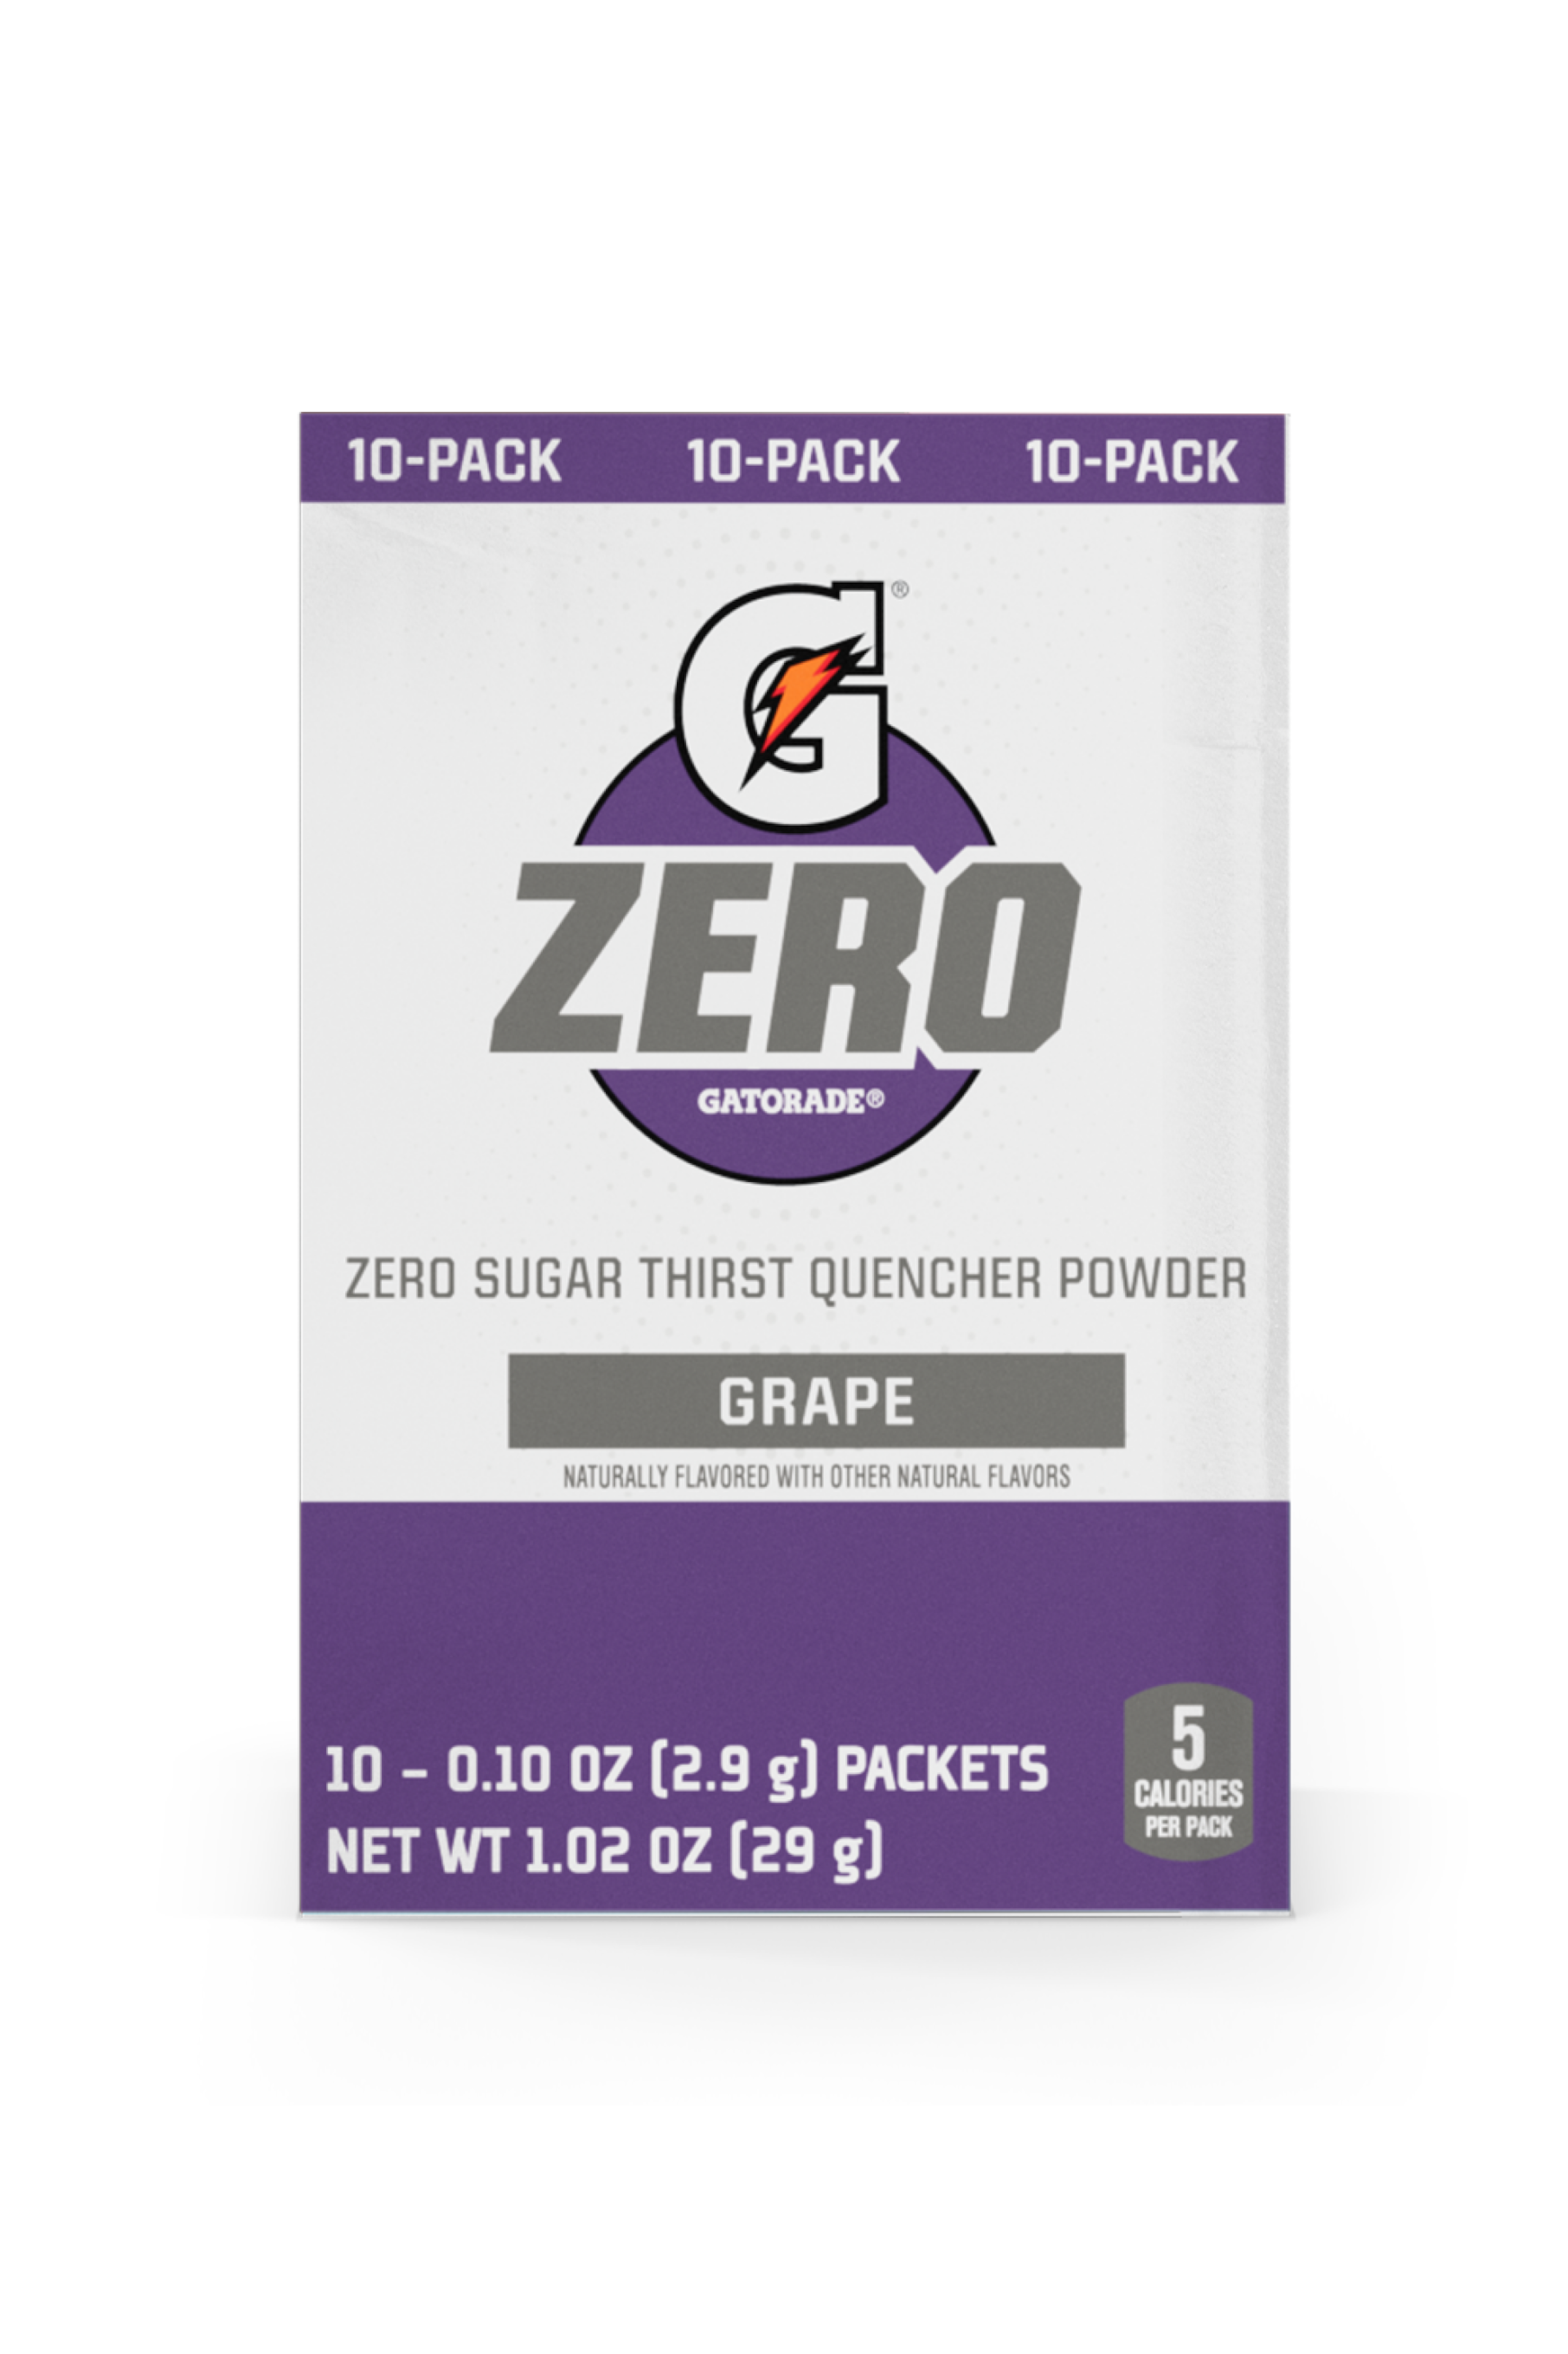 Gatorade Zero Sugar Thirst Quencher Single Serve Powder Grape 10 Pack